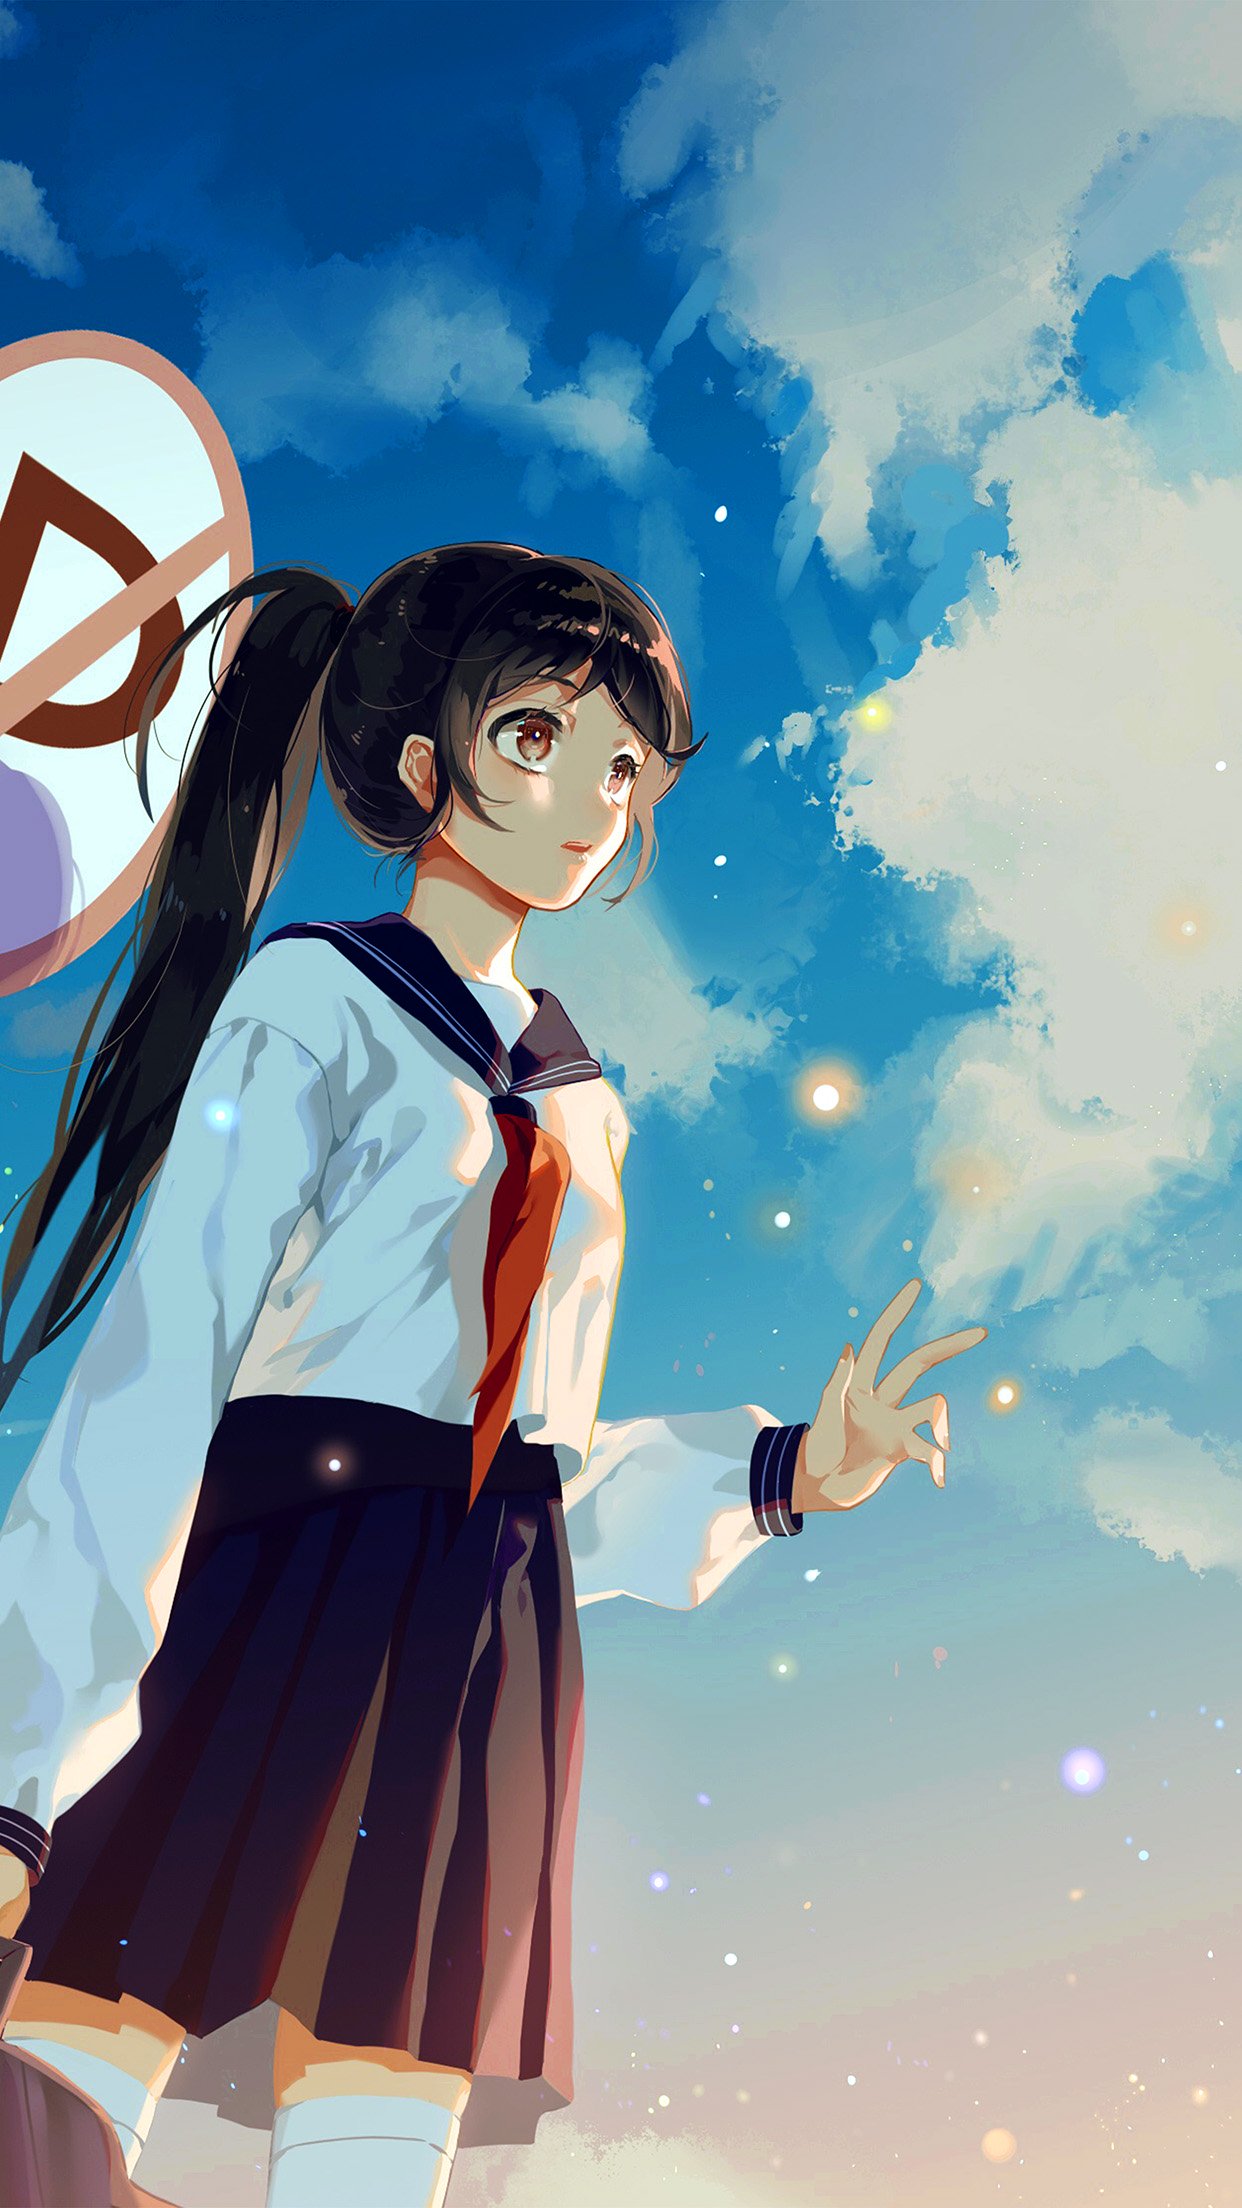 Anime Wallpaper Girl Iphone X - HD Wallpaper 